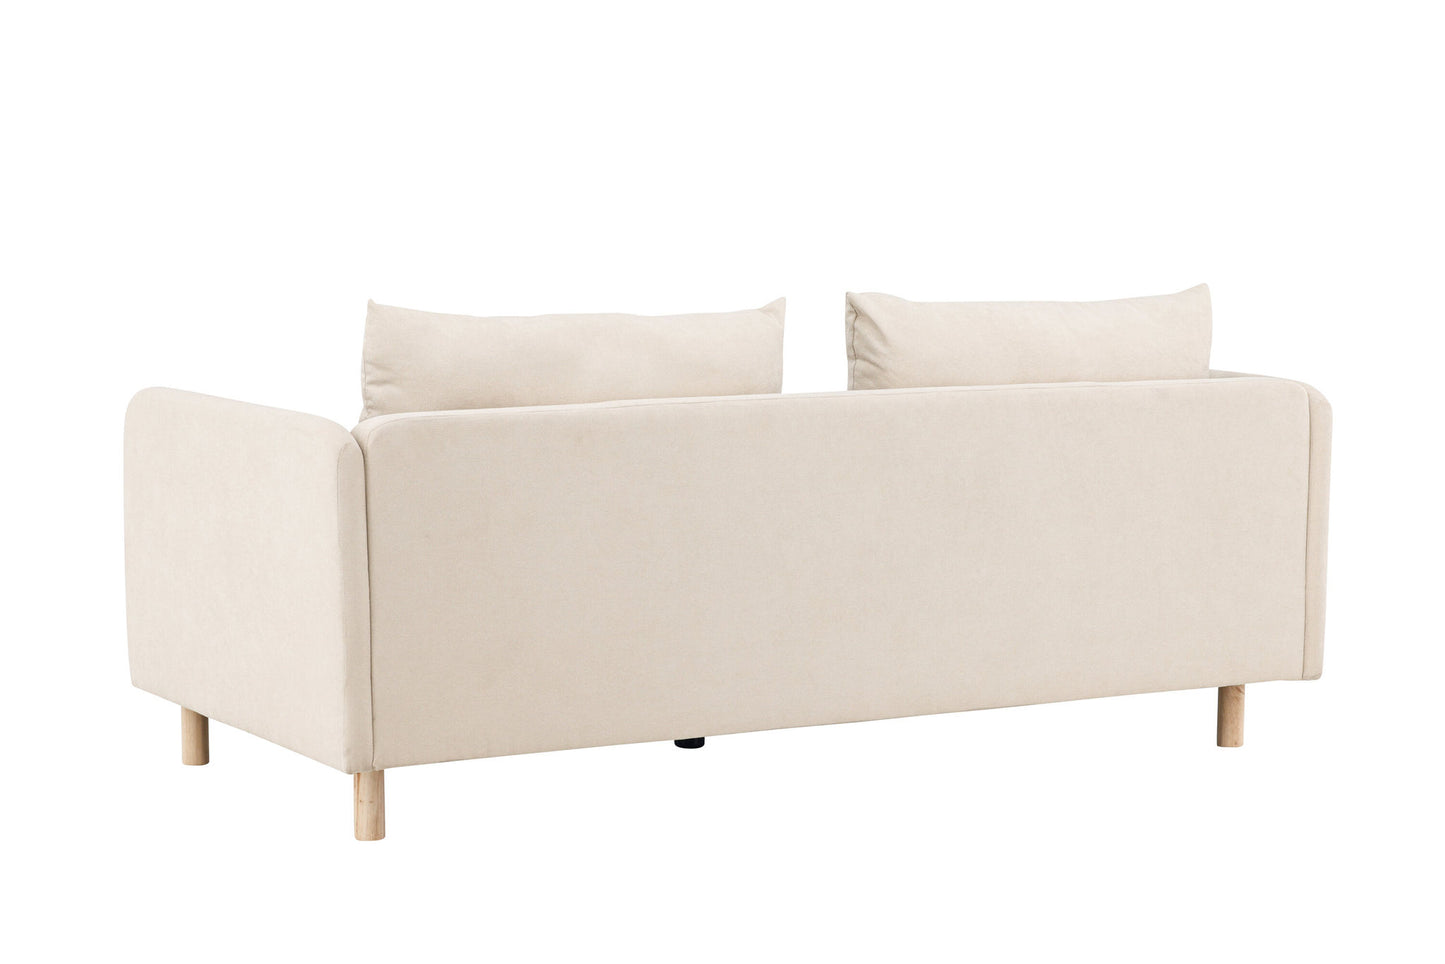 Nul 2 -sæde sofa - Woodlook / Beige stof